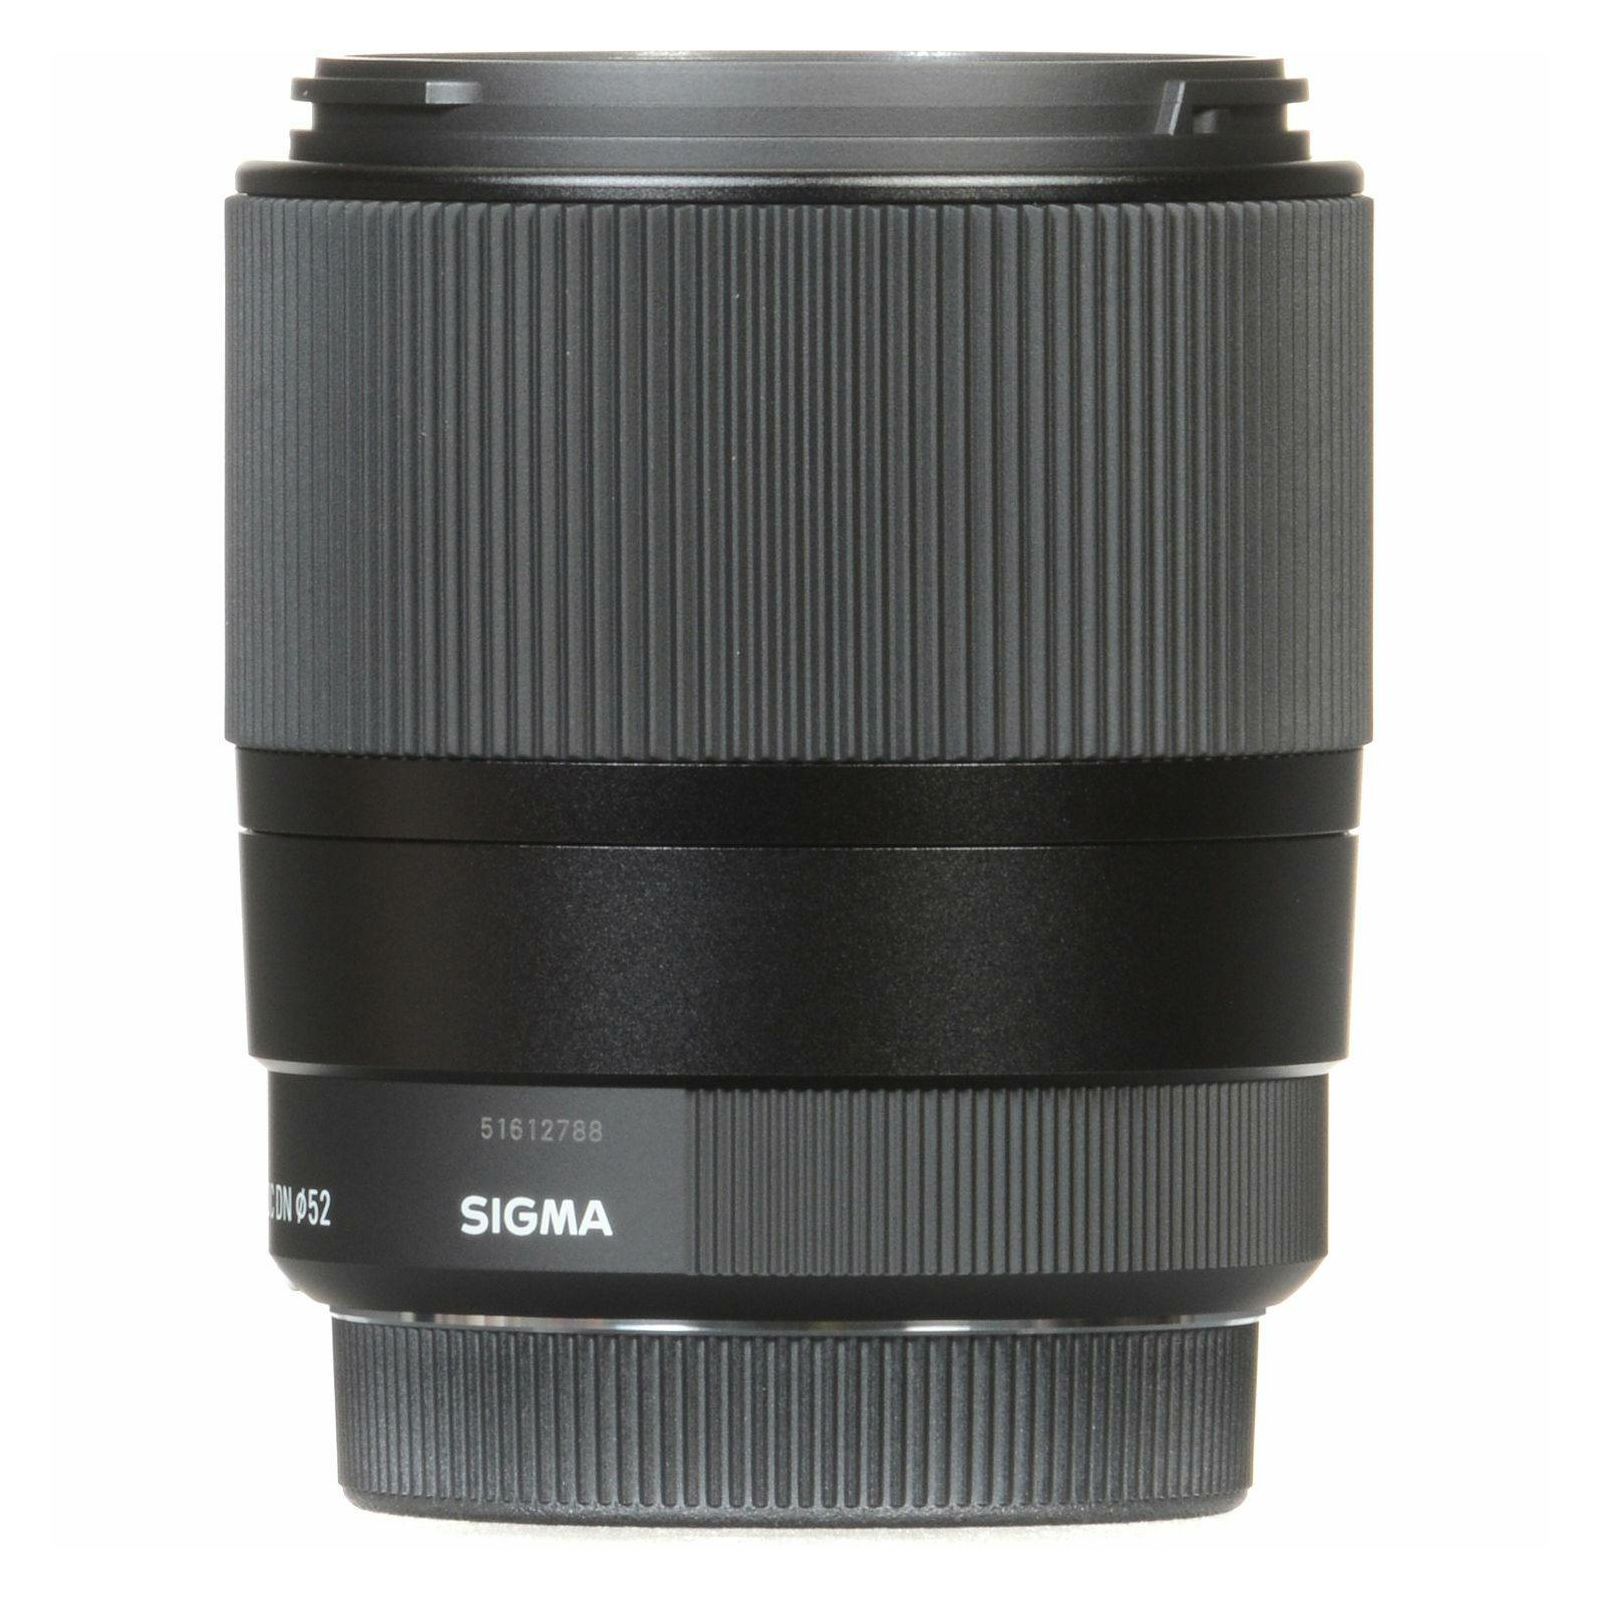 Sigma 30mm f/1.4 DC DN Contemporary objektiv za Panasonic Leica L-mount APS-C